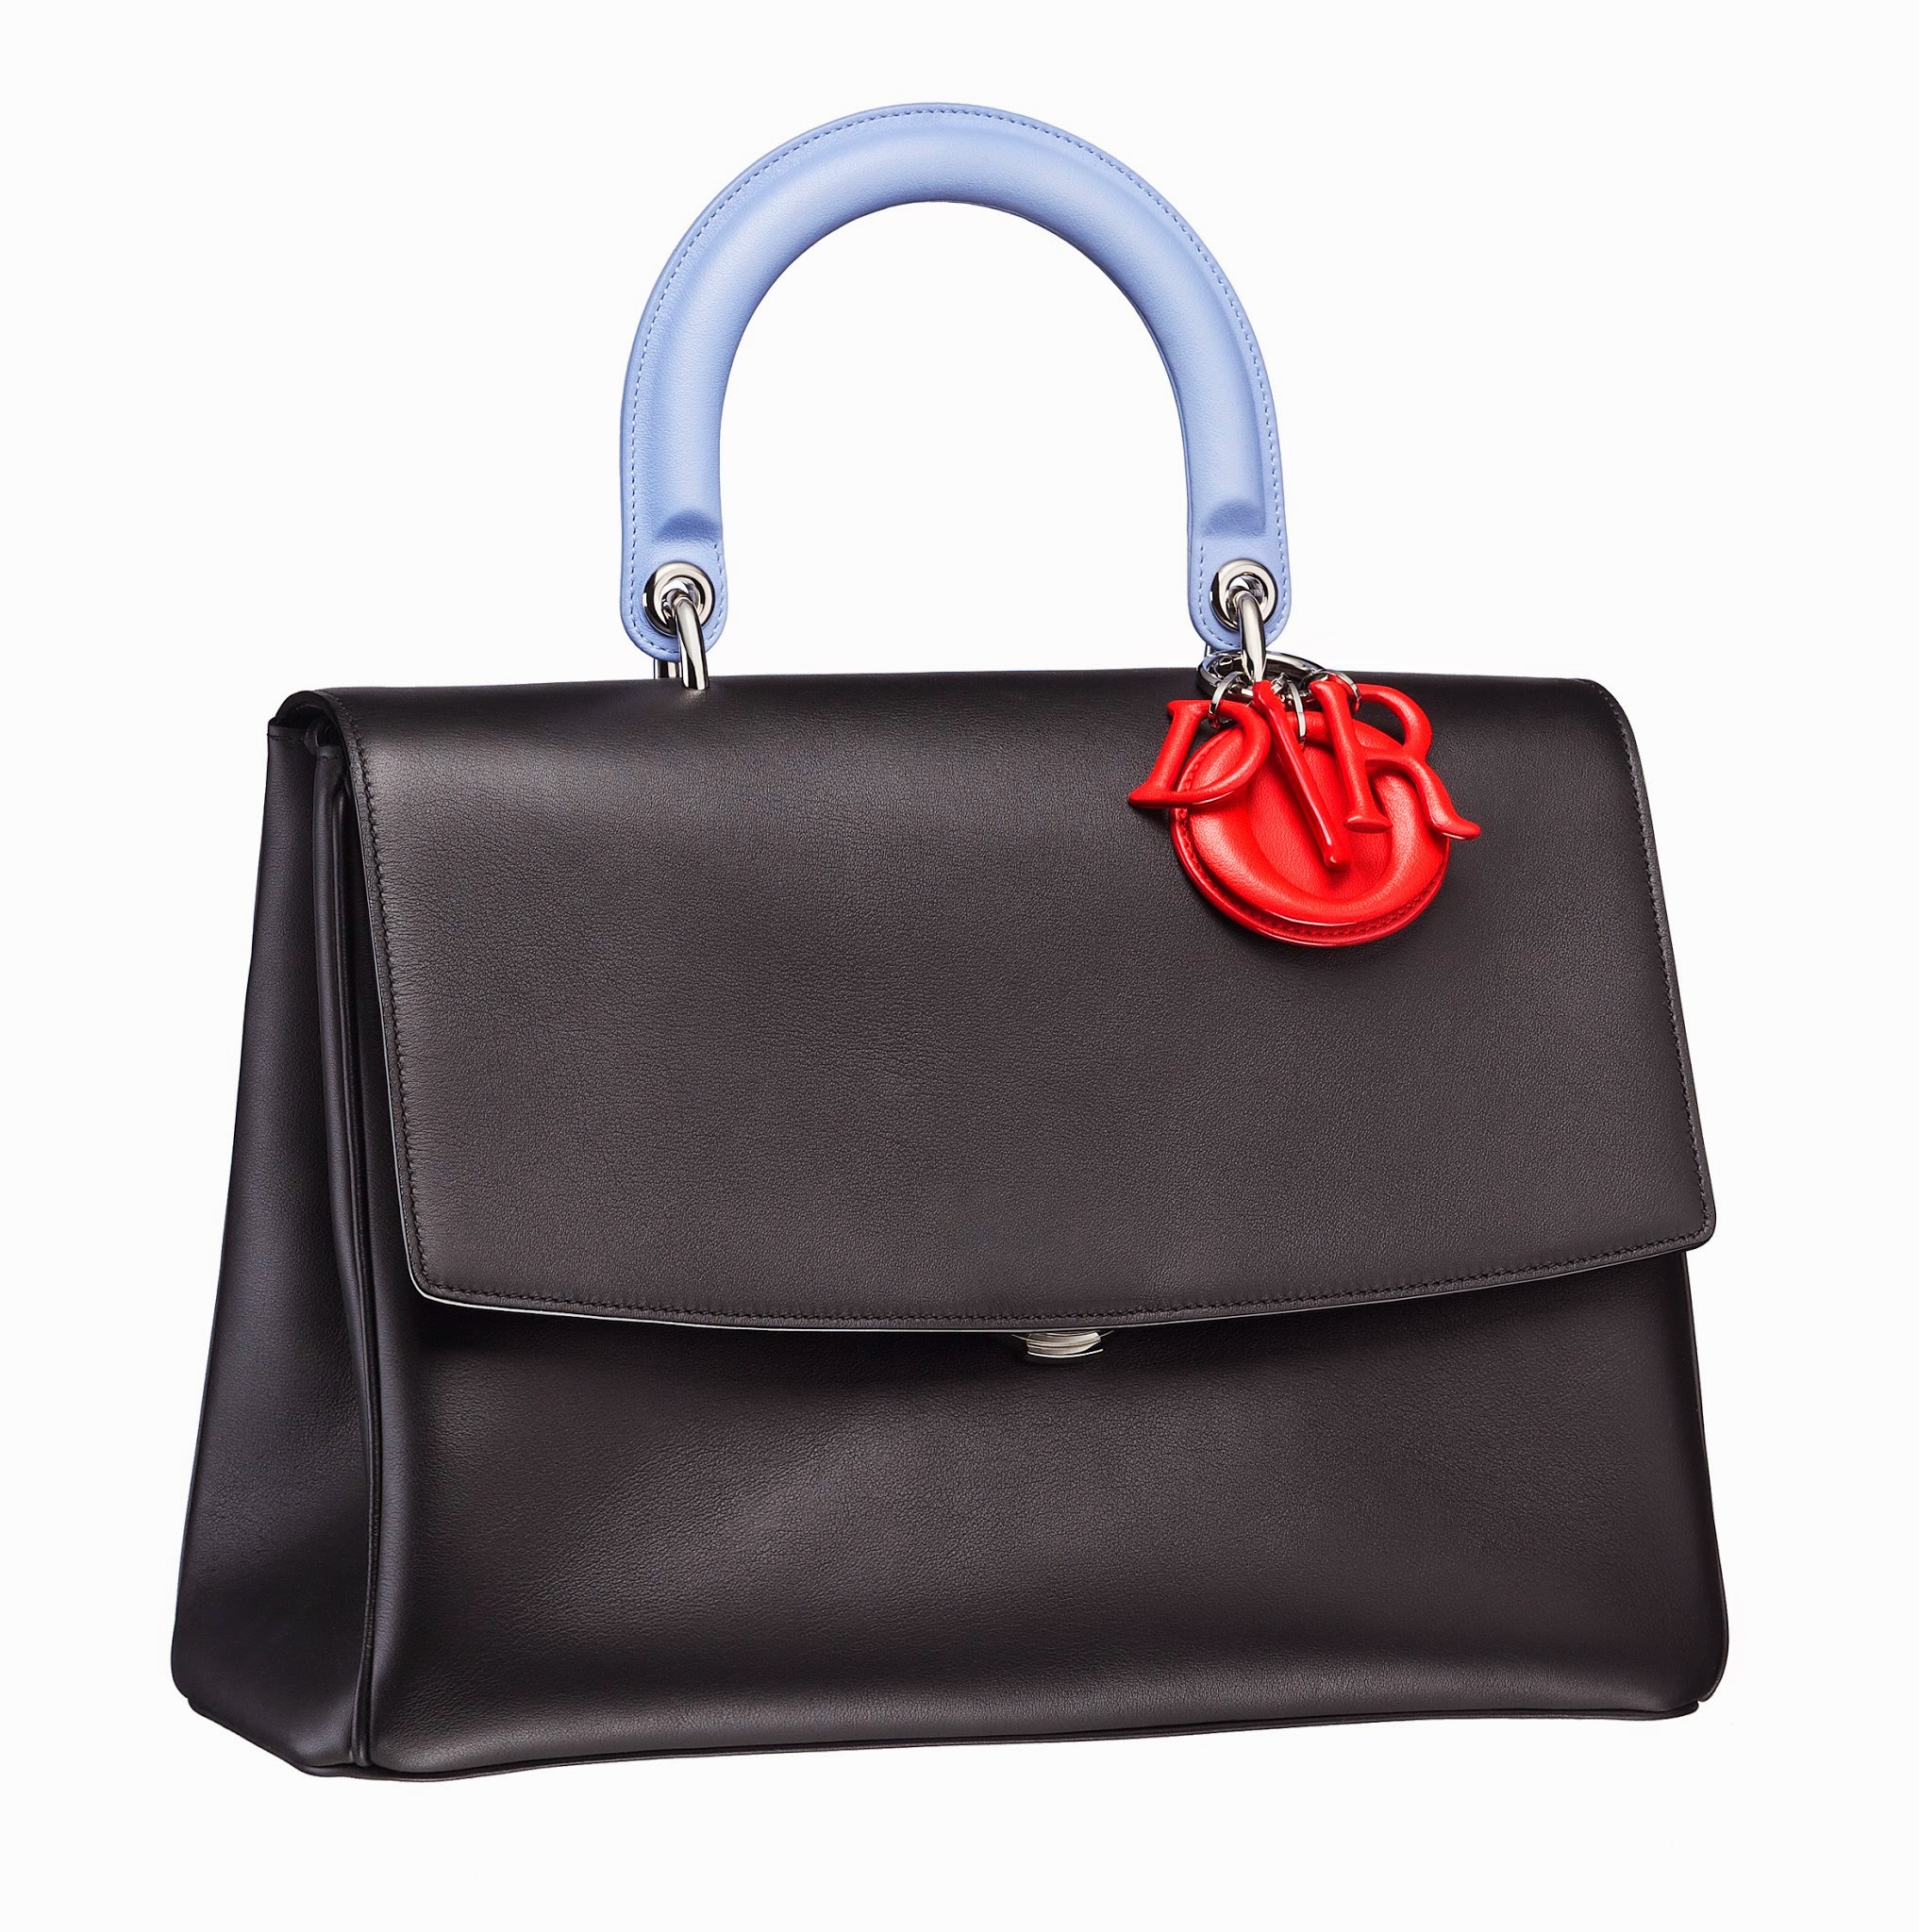 Dior's New "Be Dior" Bag